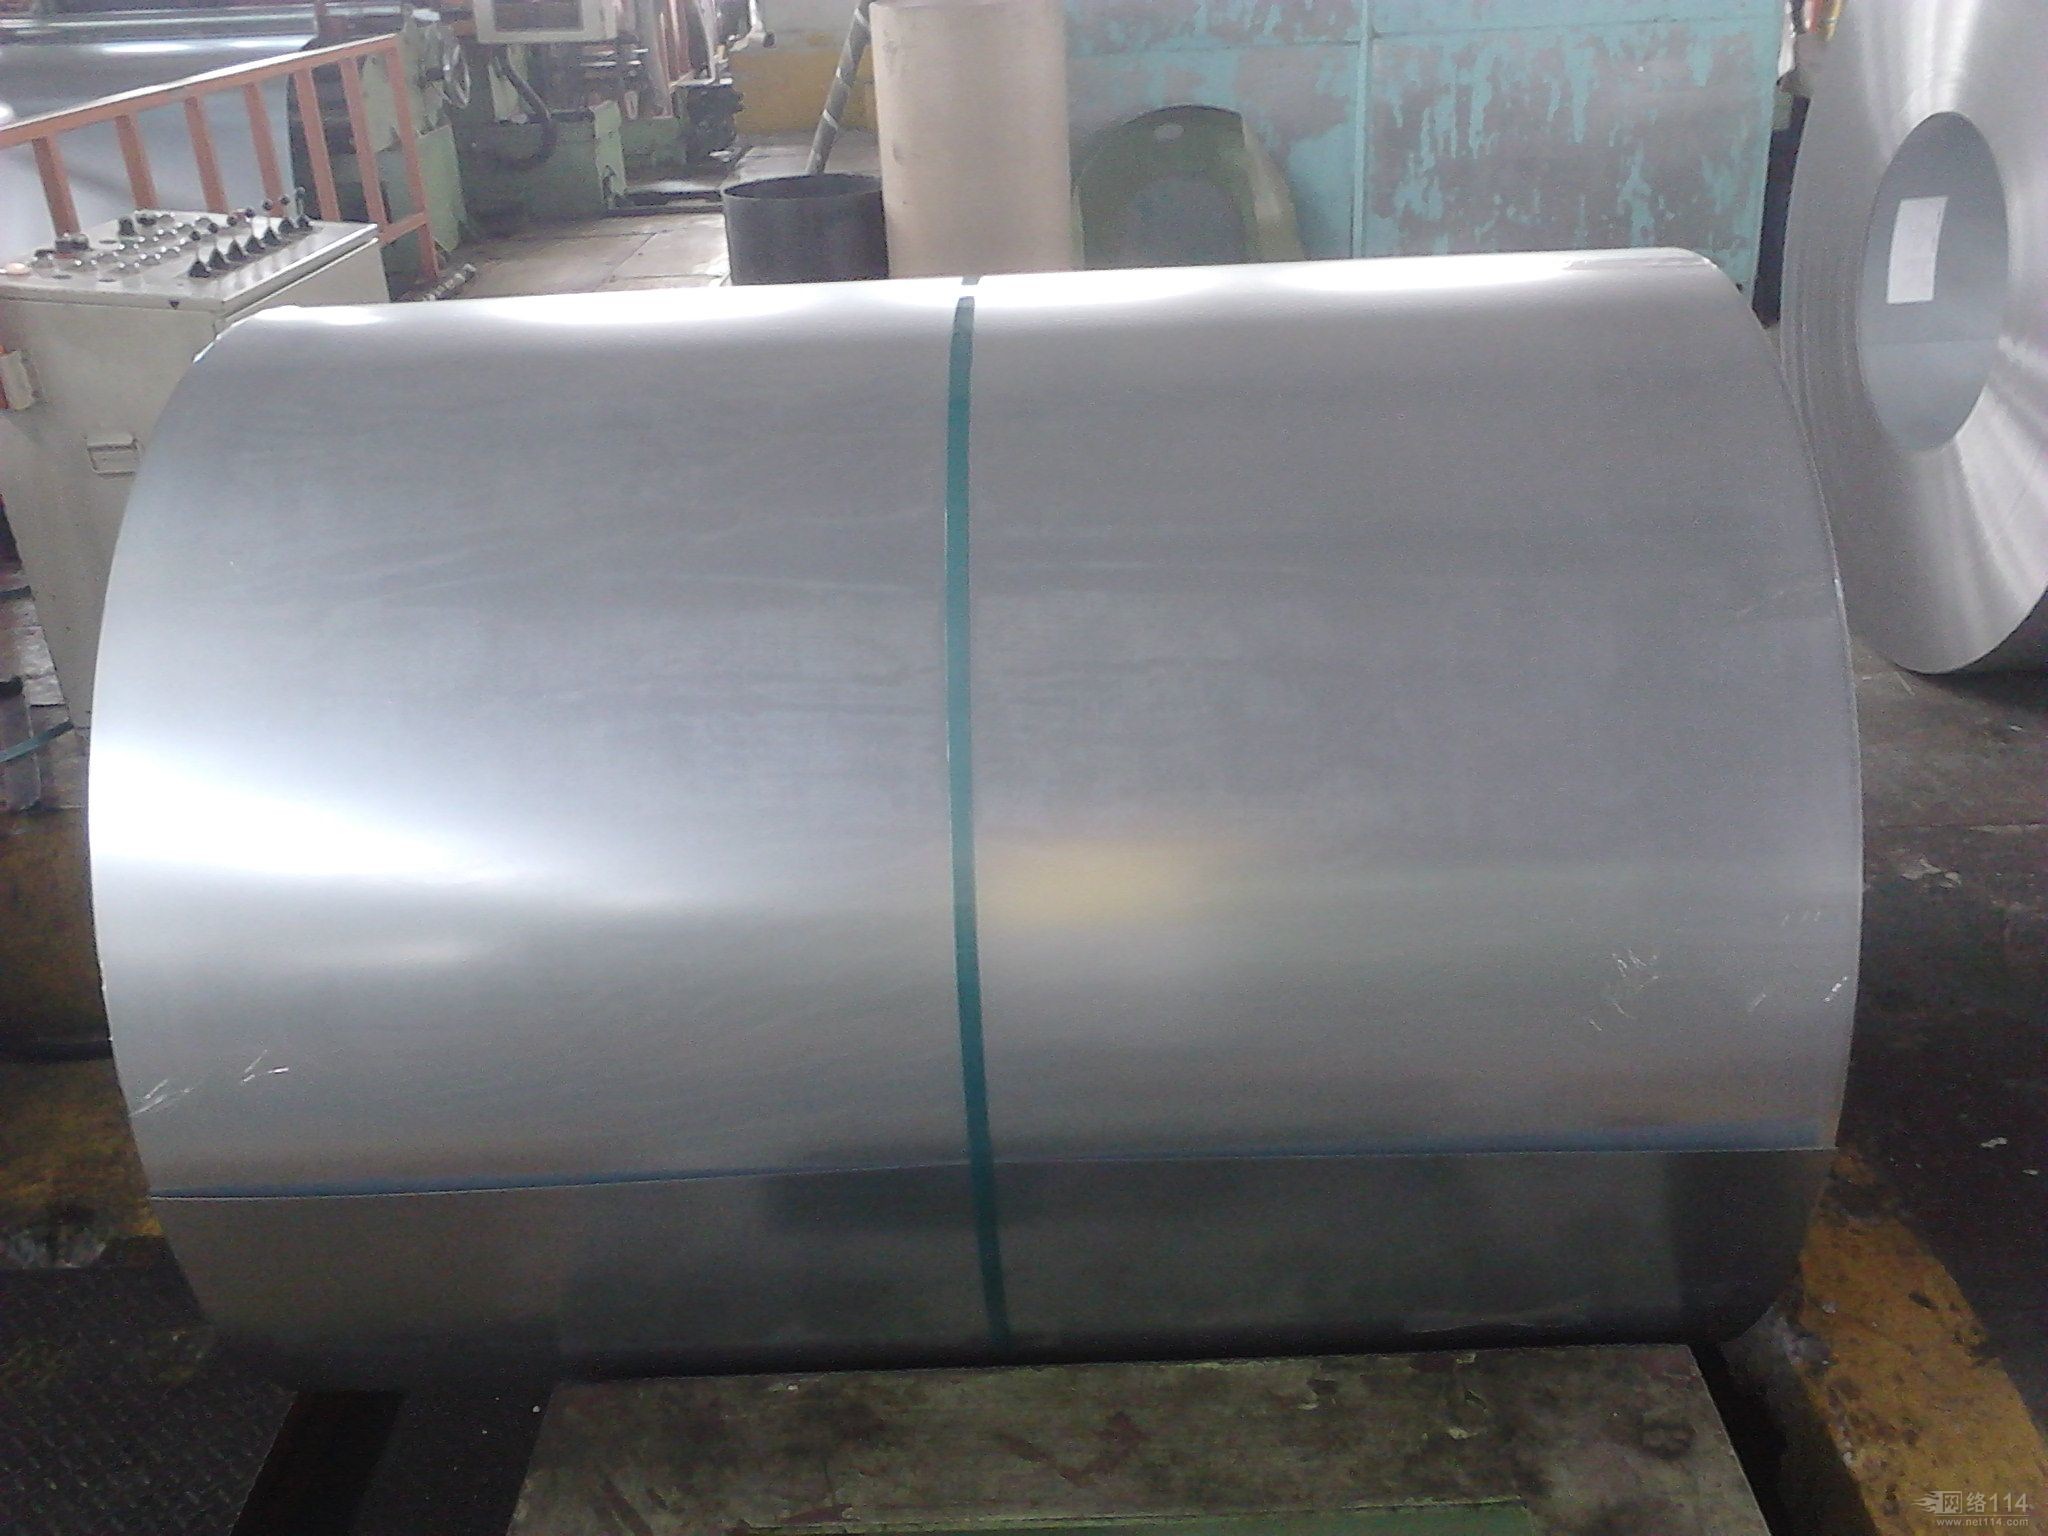 Wholesale Prepainted Galvanized Steel Mirror Aluminum Coil Turkey Is 14246 SGCC Ppgi from china suppliers